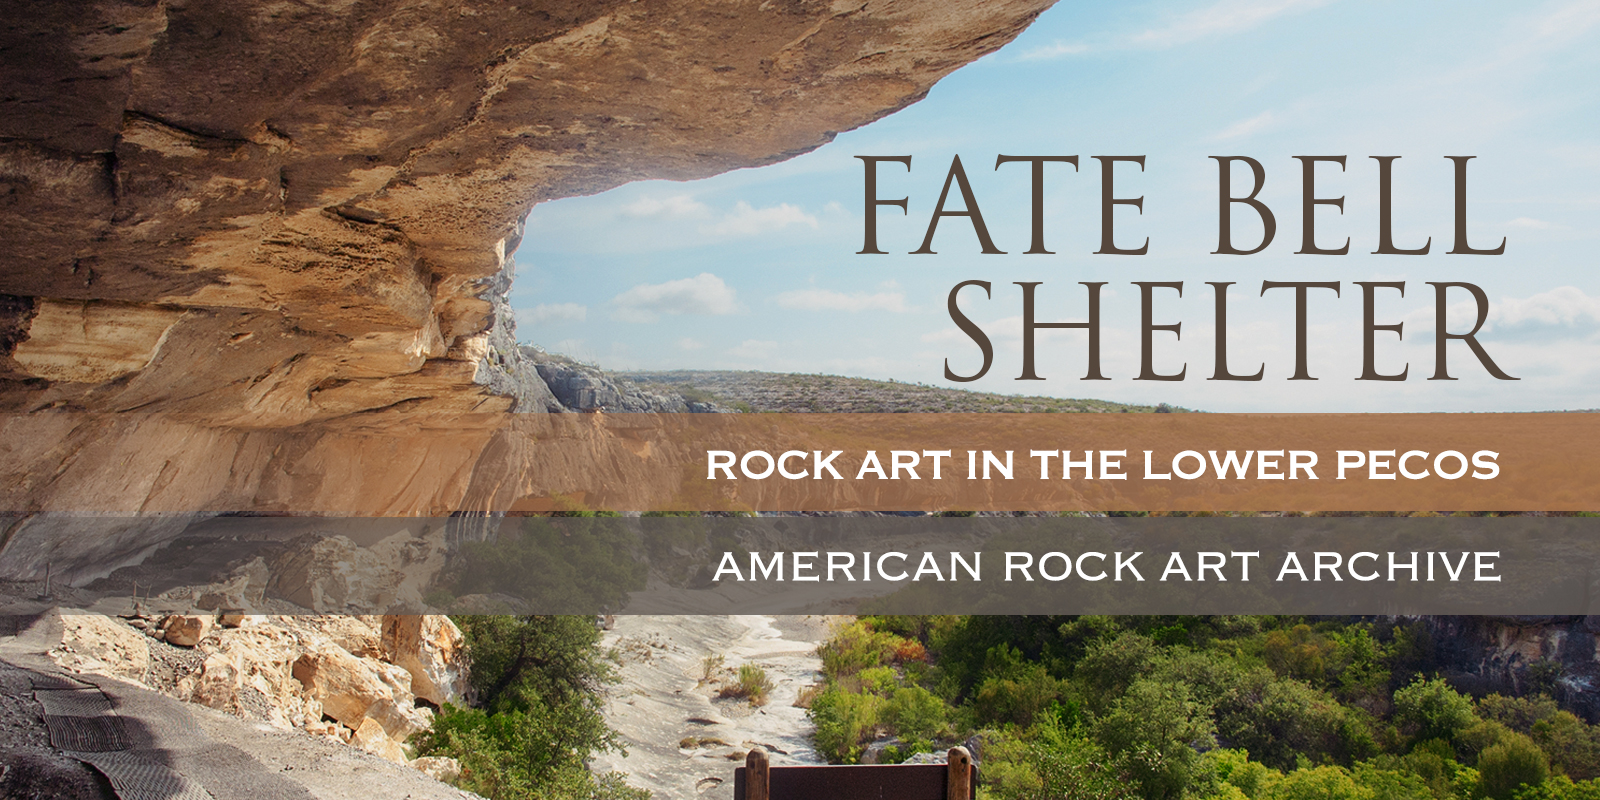 Fate Bell Shelter Lower Pecos Canyonlands Rock Art America Texas United States Petroglyphs Pictographs Archaeology Prehistory Rockart